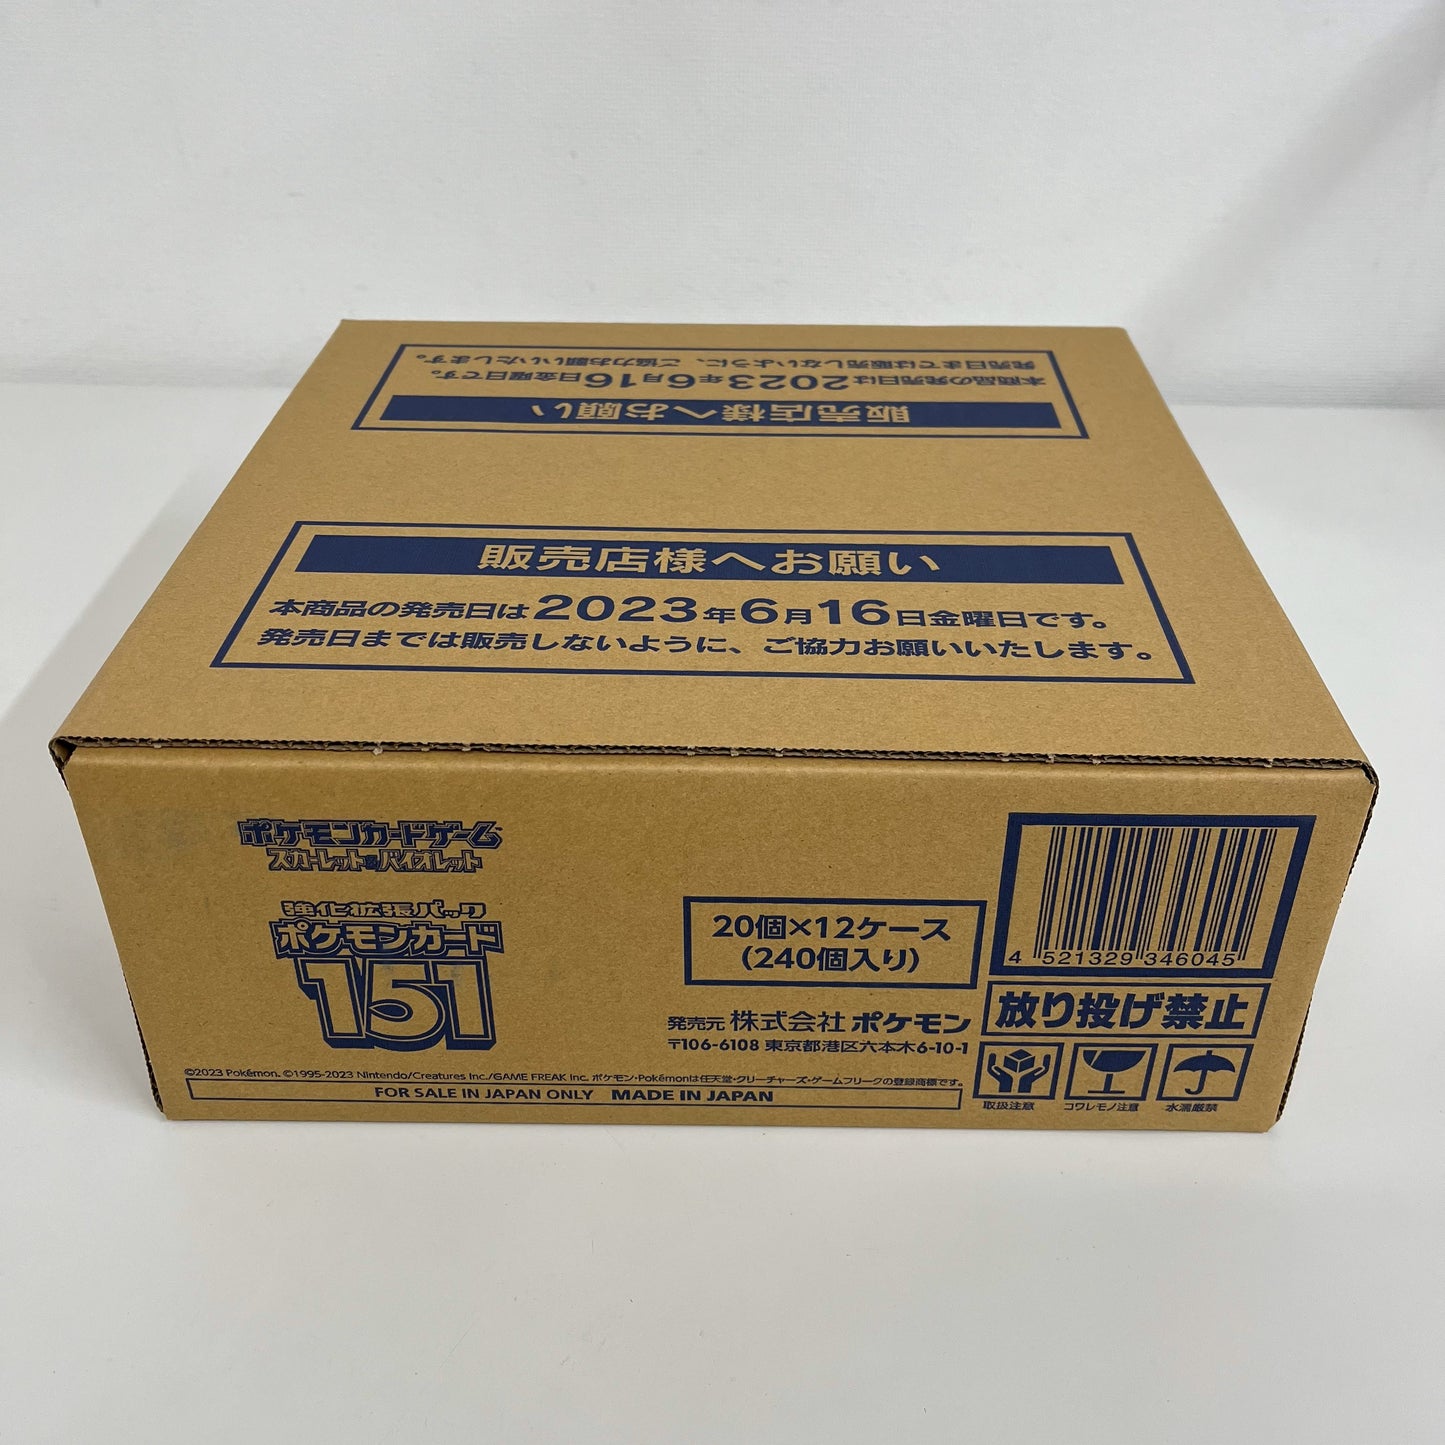 Pokemon Card Scarlet & Violet Booster Box Pokemon card 151 1 carton (12 Boxes) sv2a Japanese